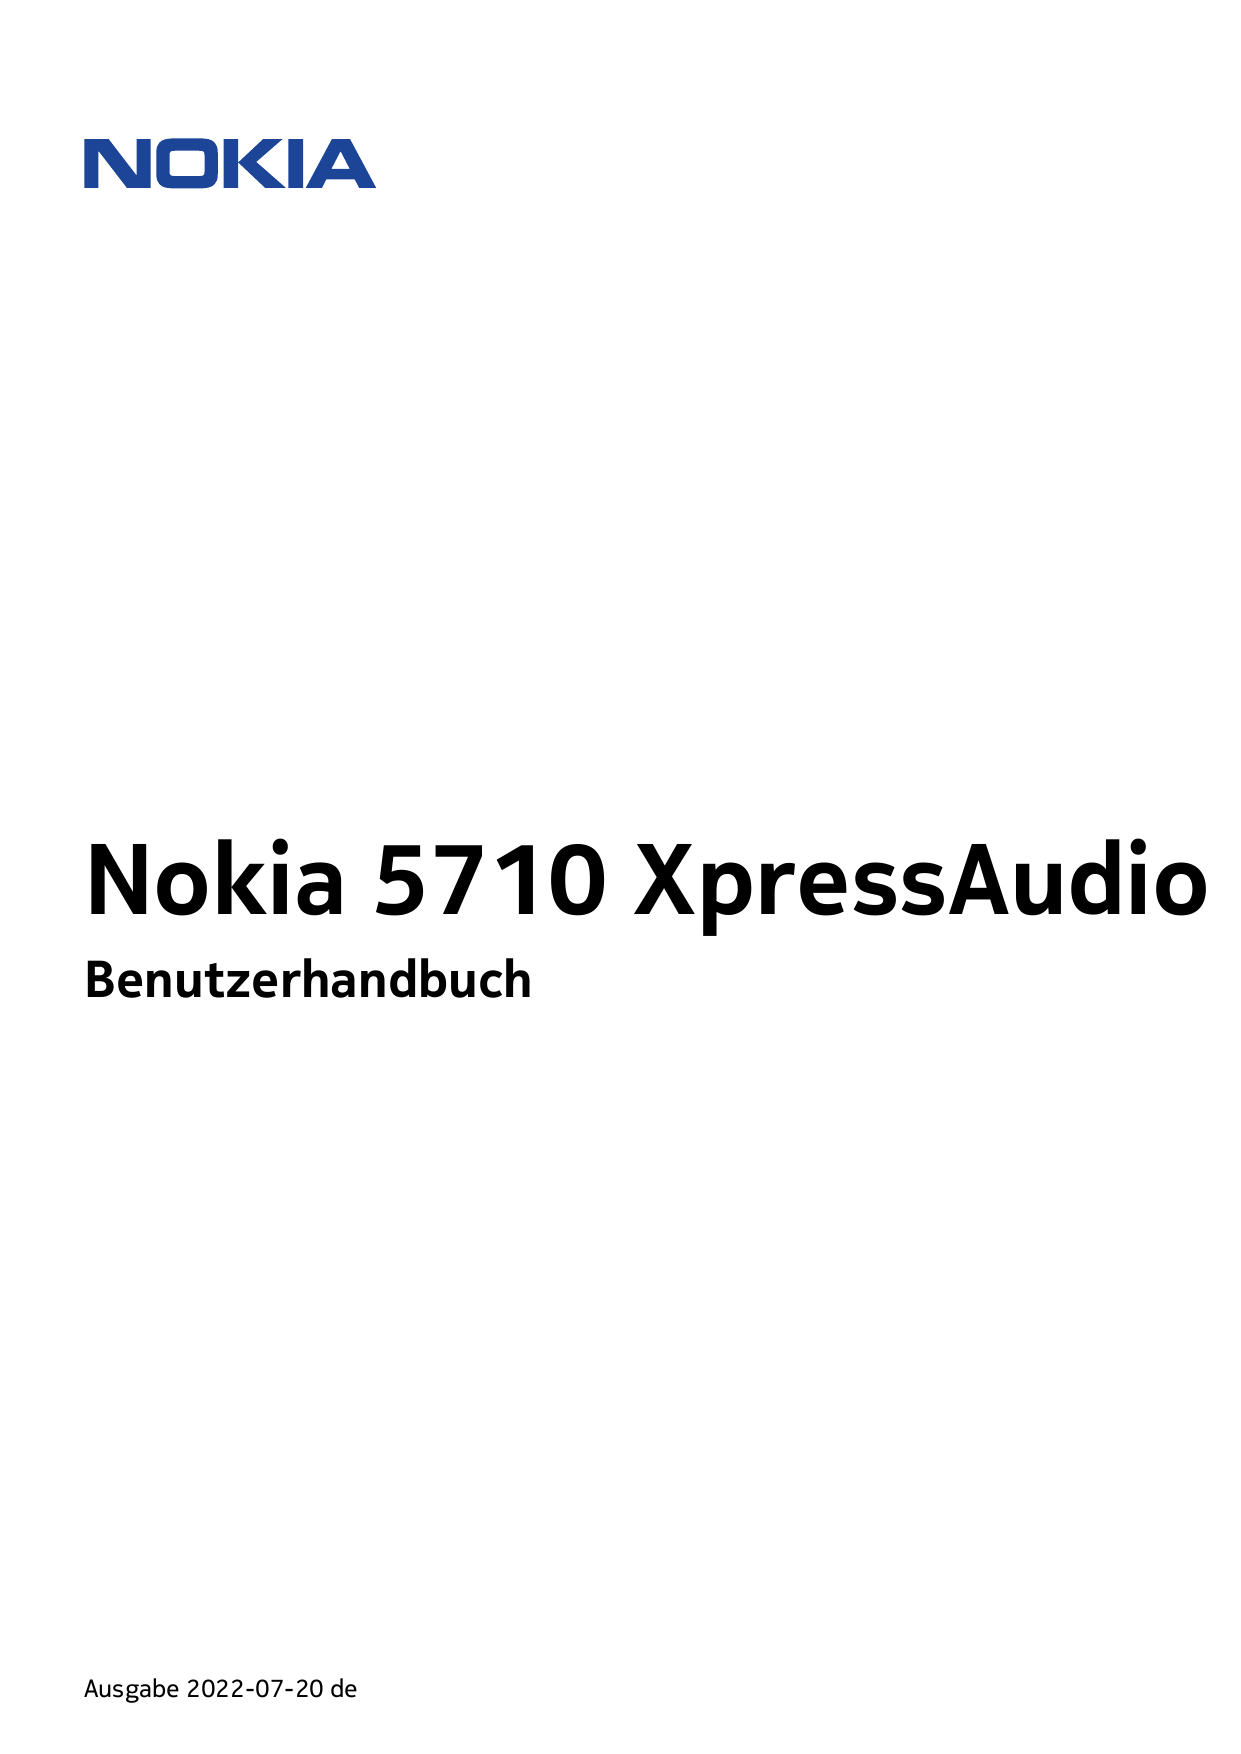 Nokia 5710 XpressAudioBenutzerhandbuchAusgabe 2022-07-20 de